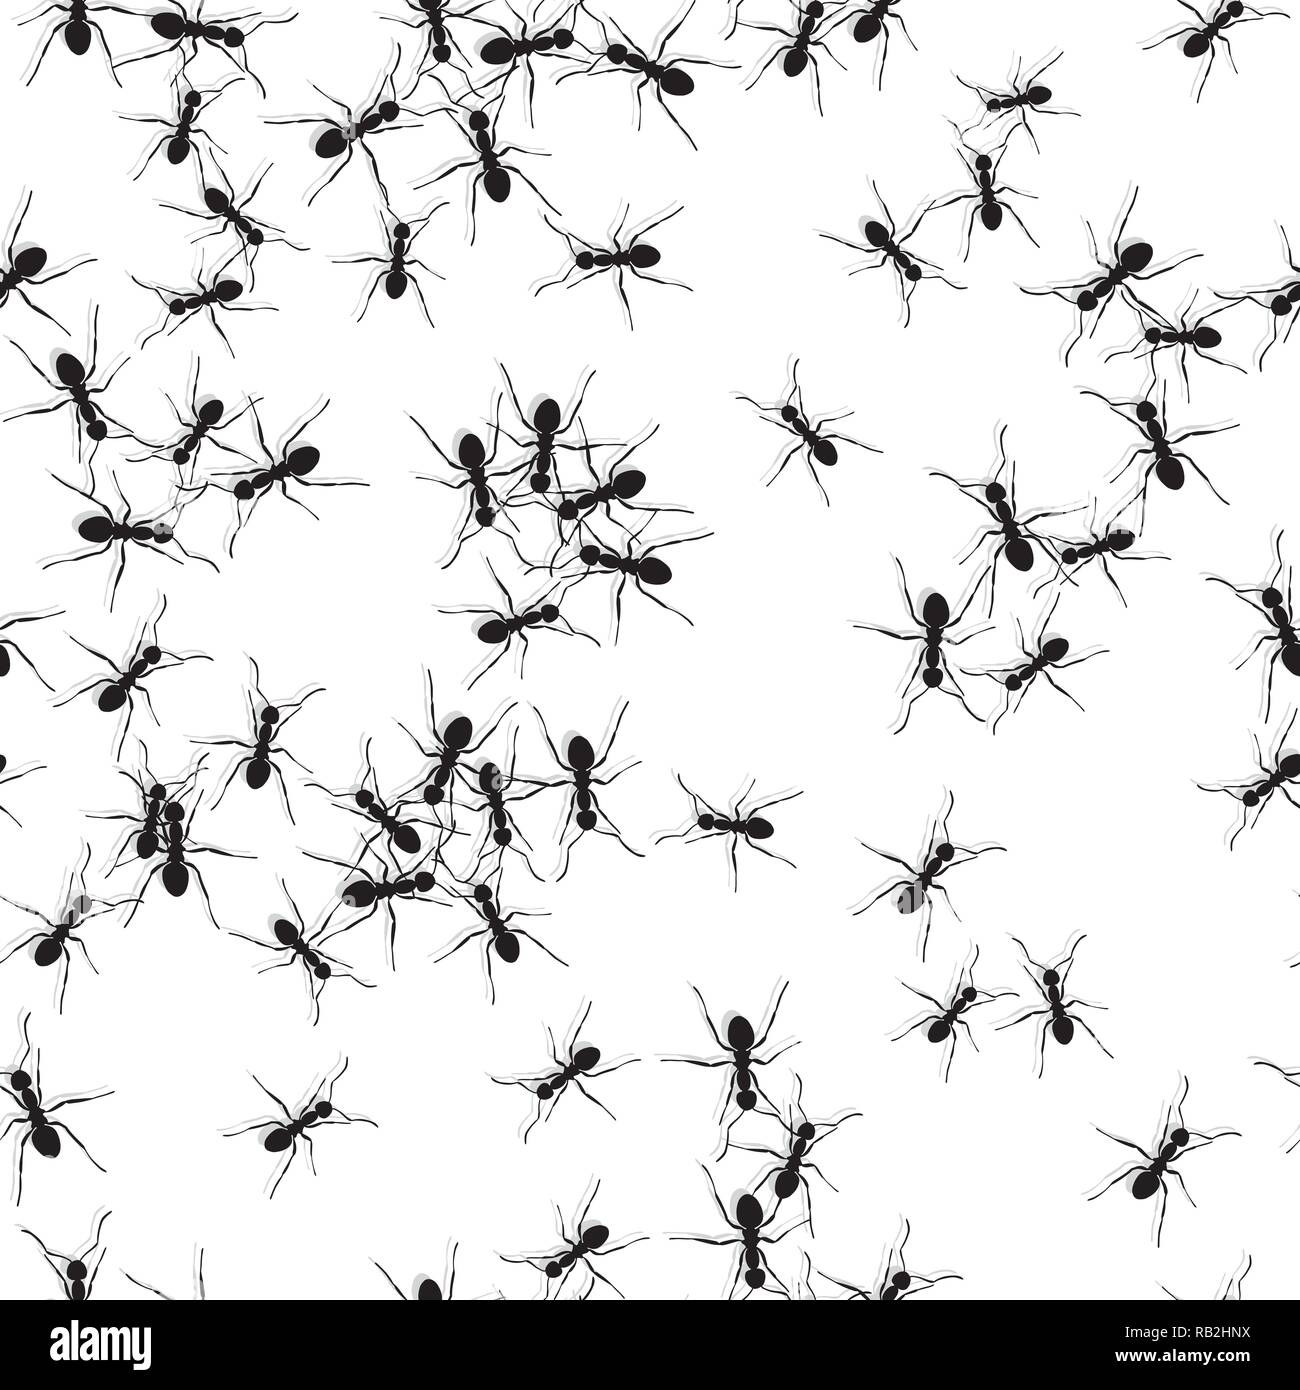 Random Ant Seamless Pattern Representing Teamwork. Black and White Stock Vector